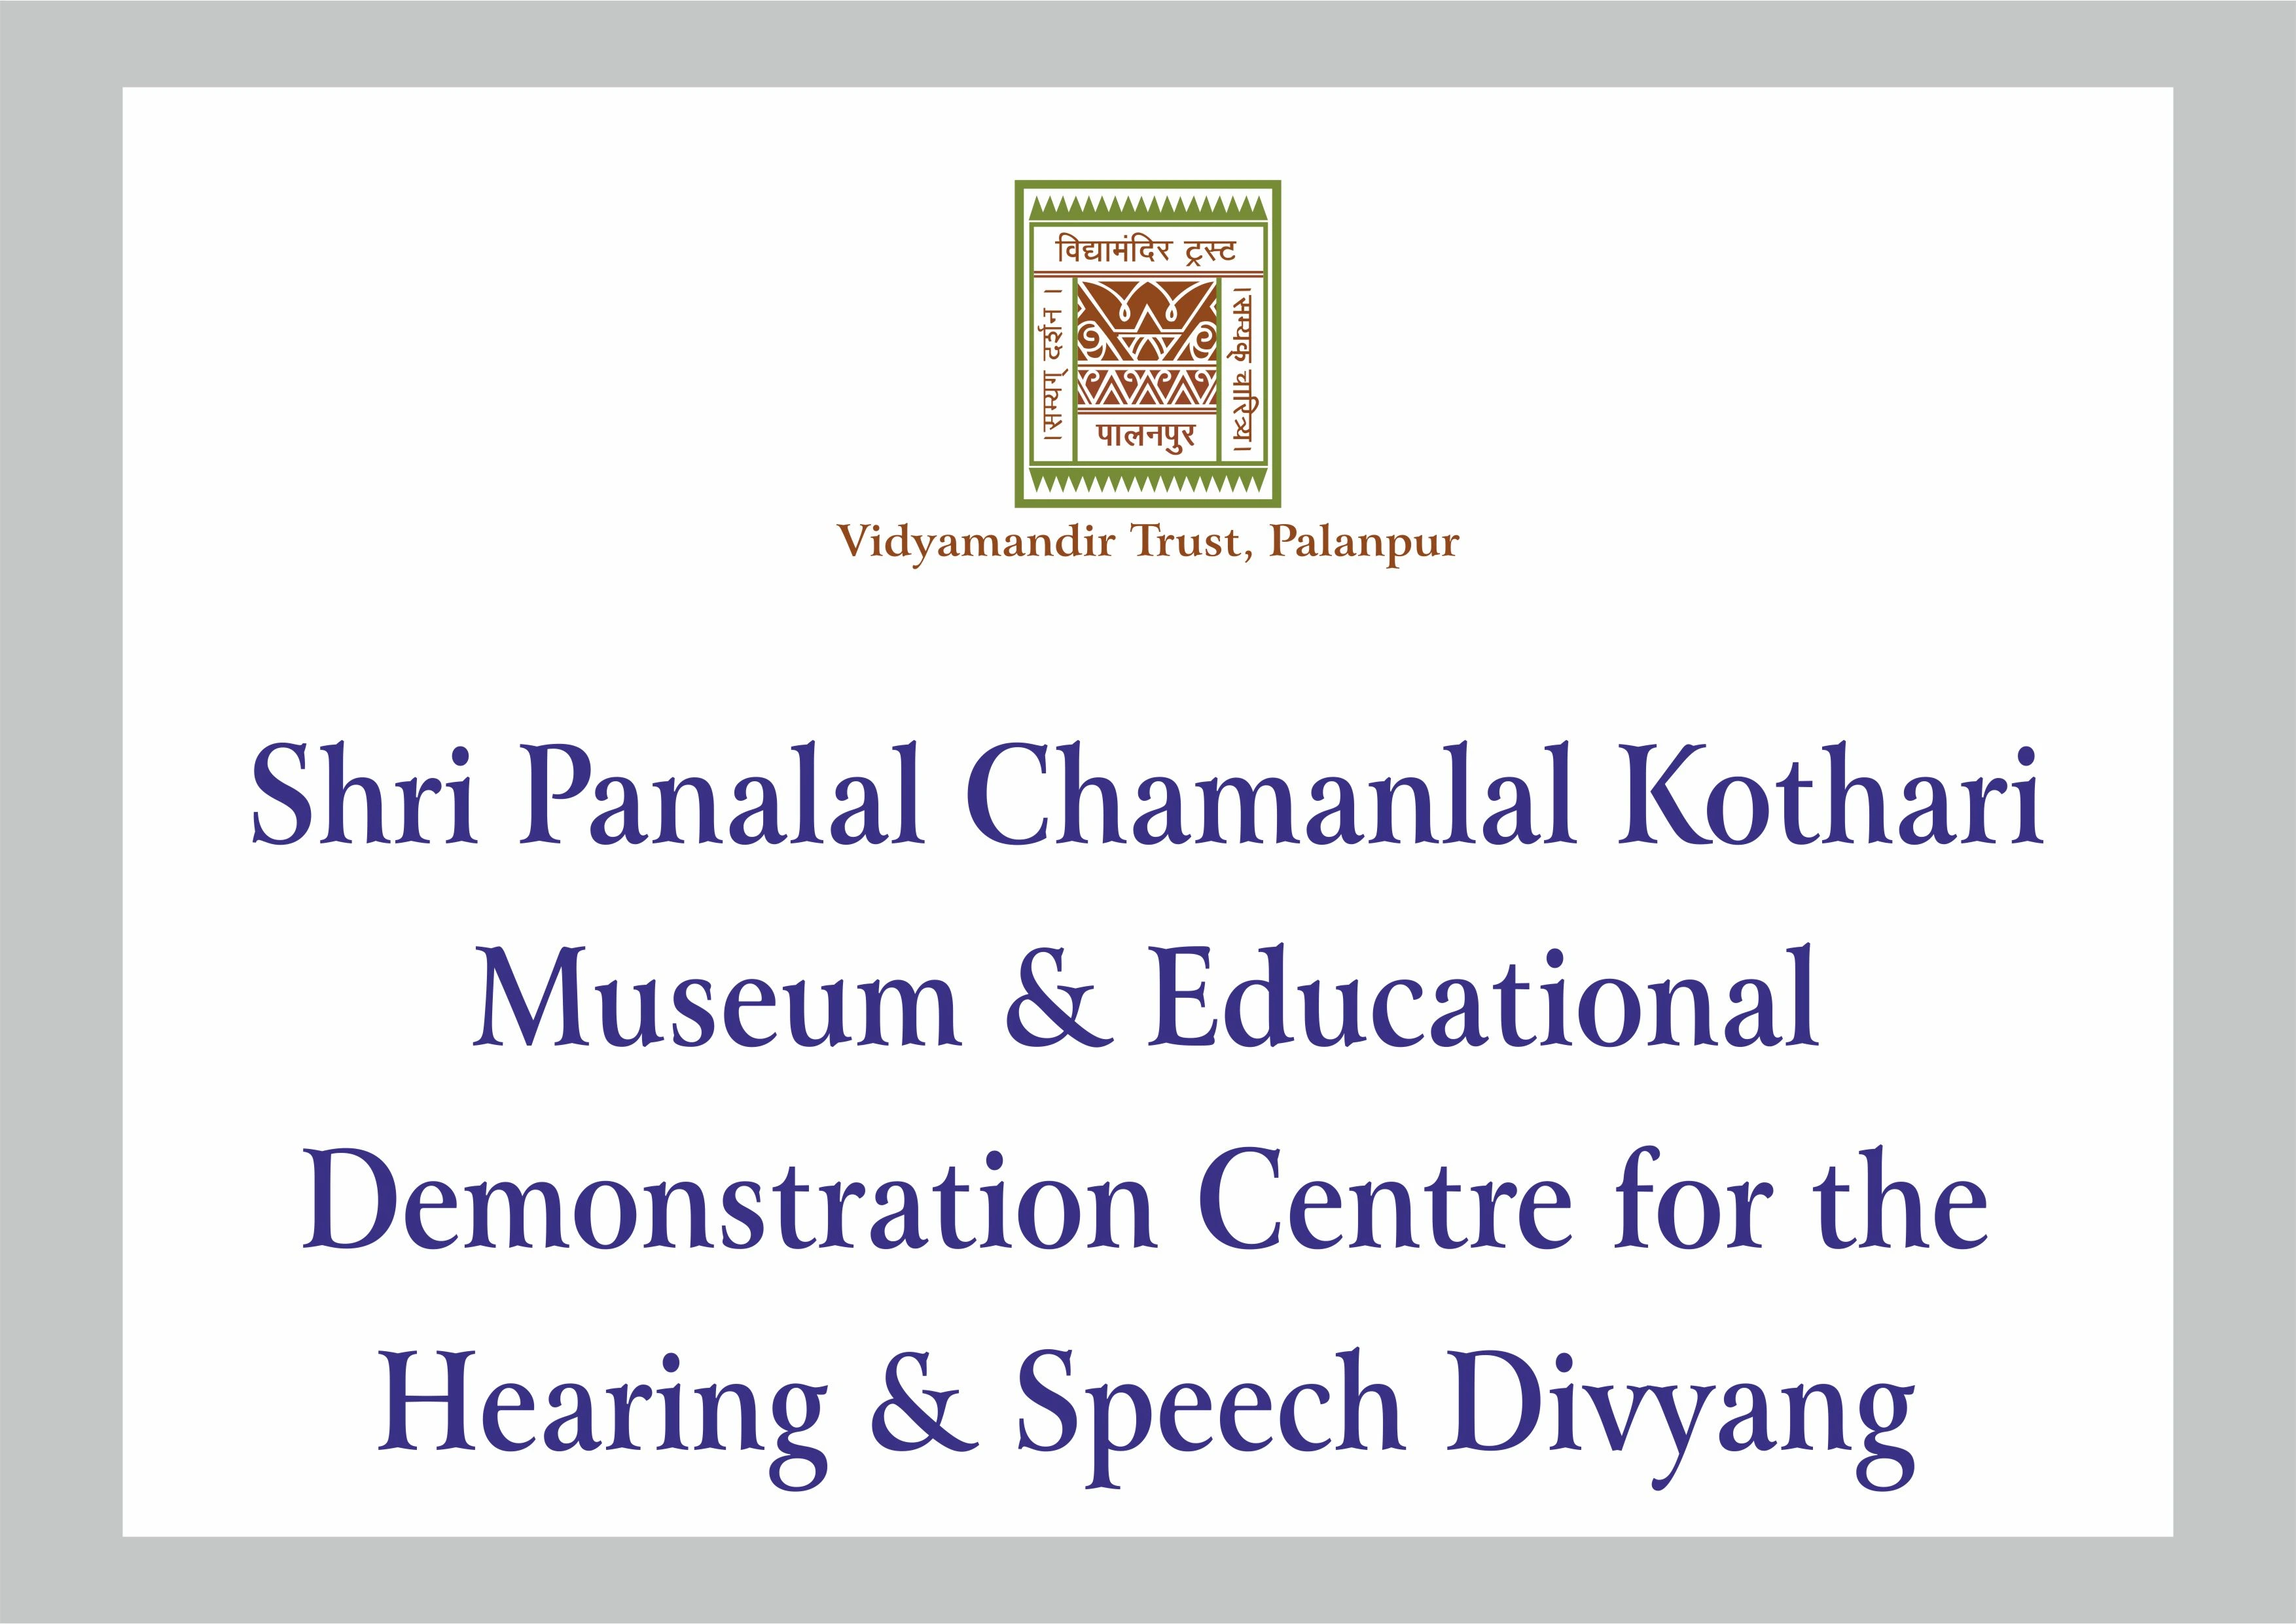 Shri Panalal Chamanlal Kothari Museum & Educational Demonstration Centre for the Hearing & Speech Divyang - Building Photo